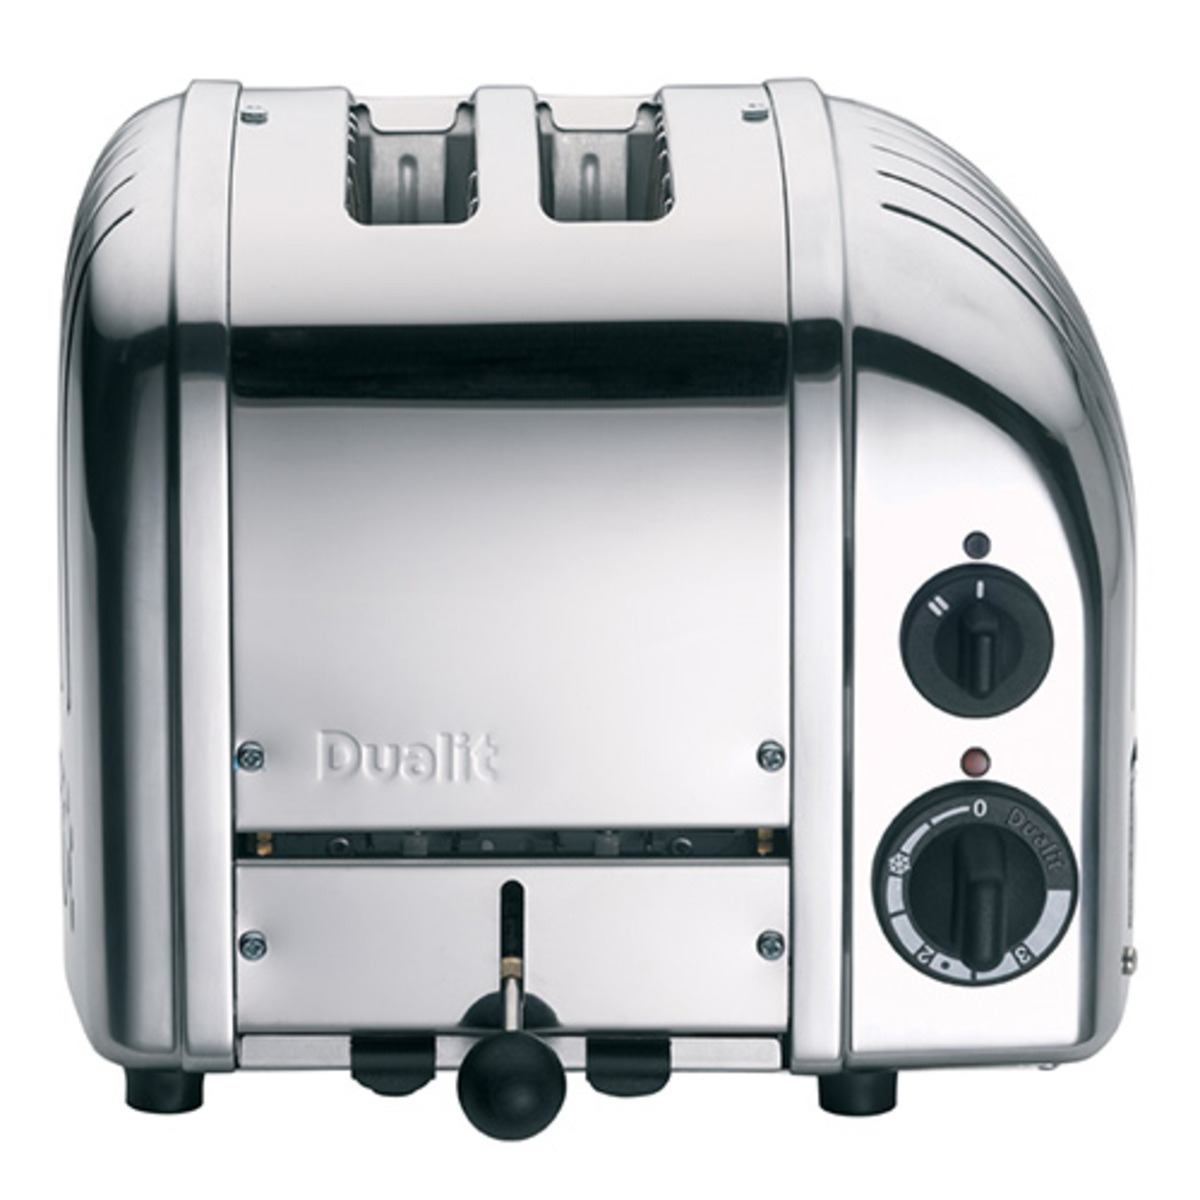 Dualit 20441 Classic Vario AWS 2 Slot Toaster, Polished